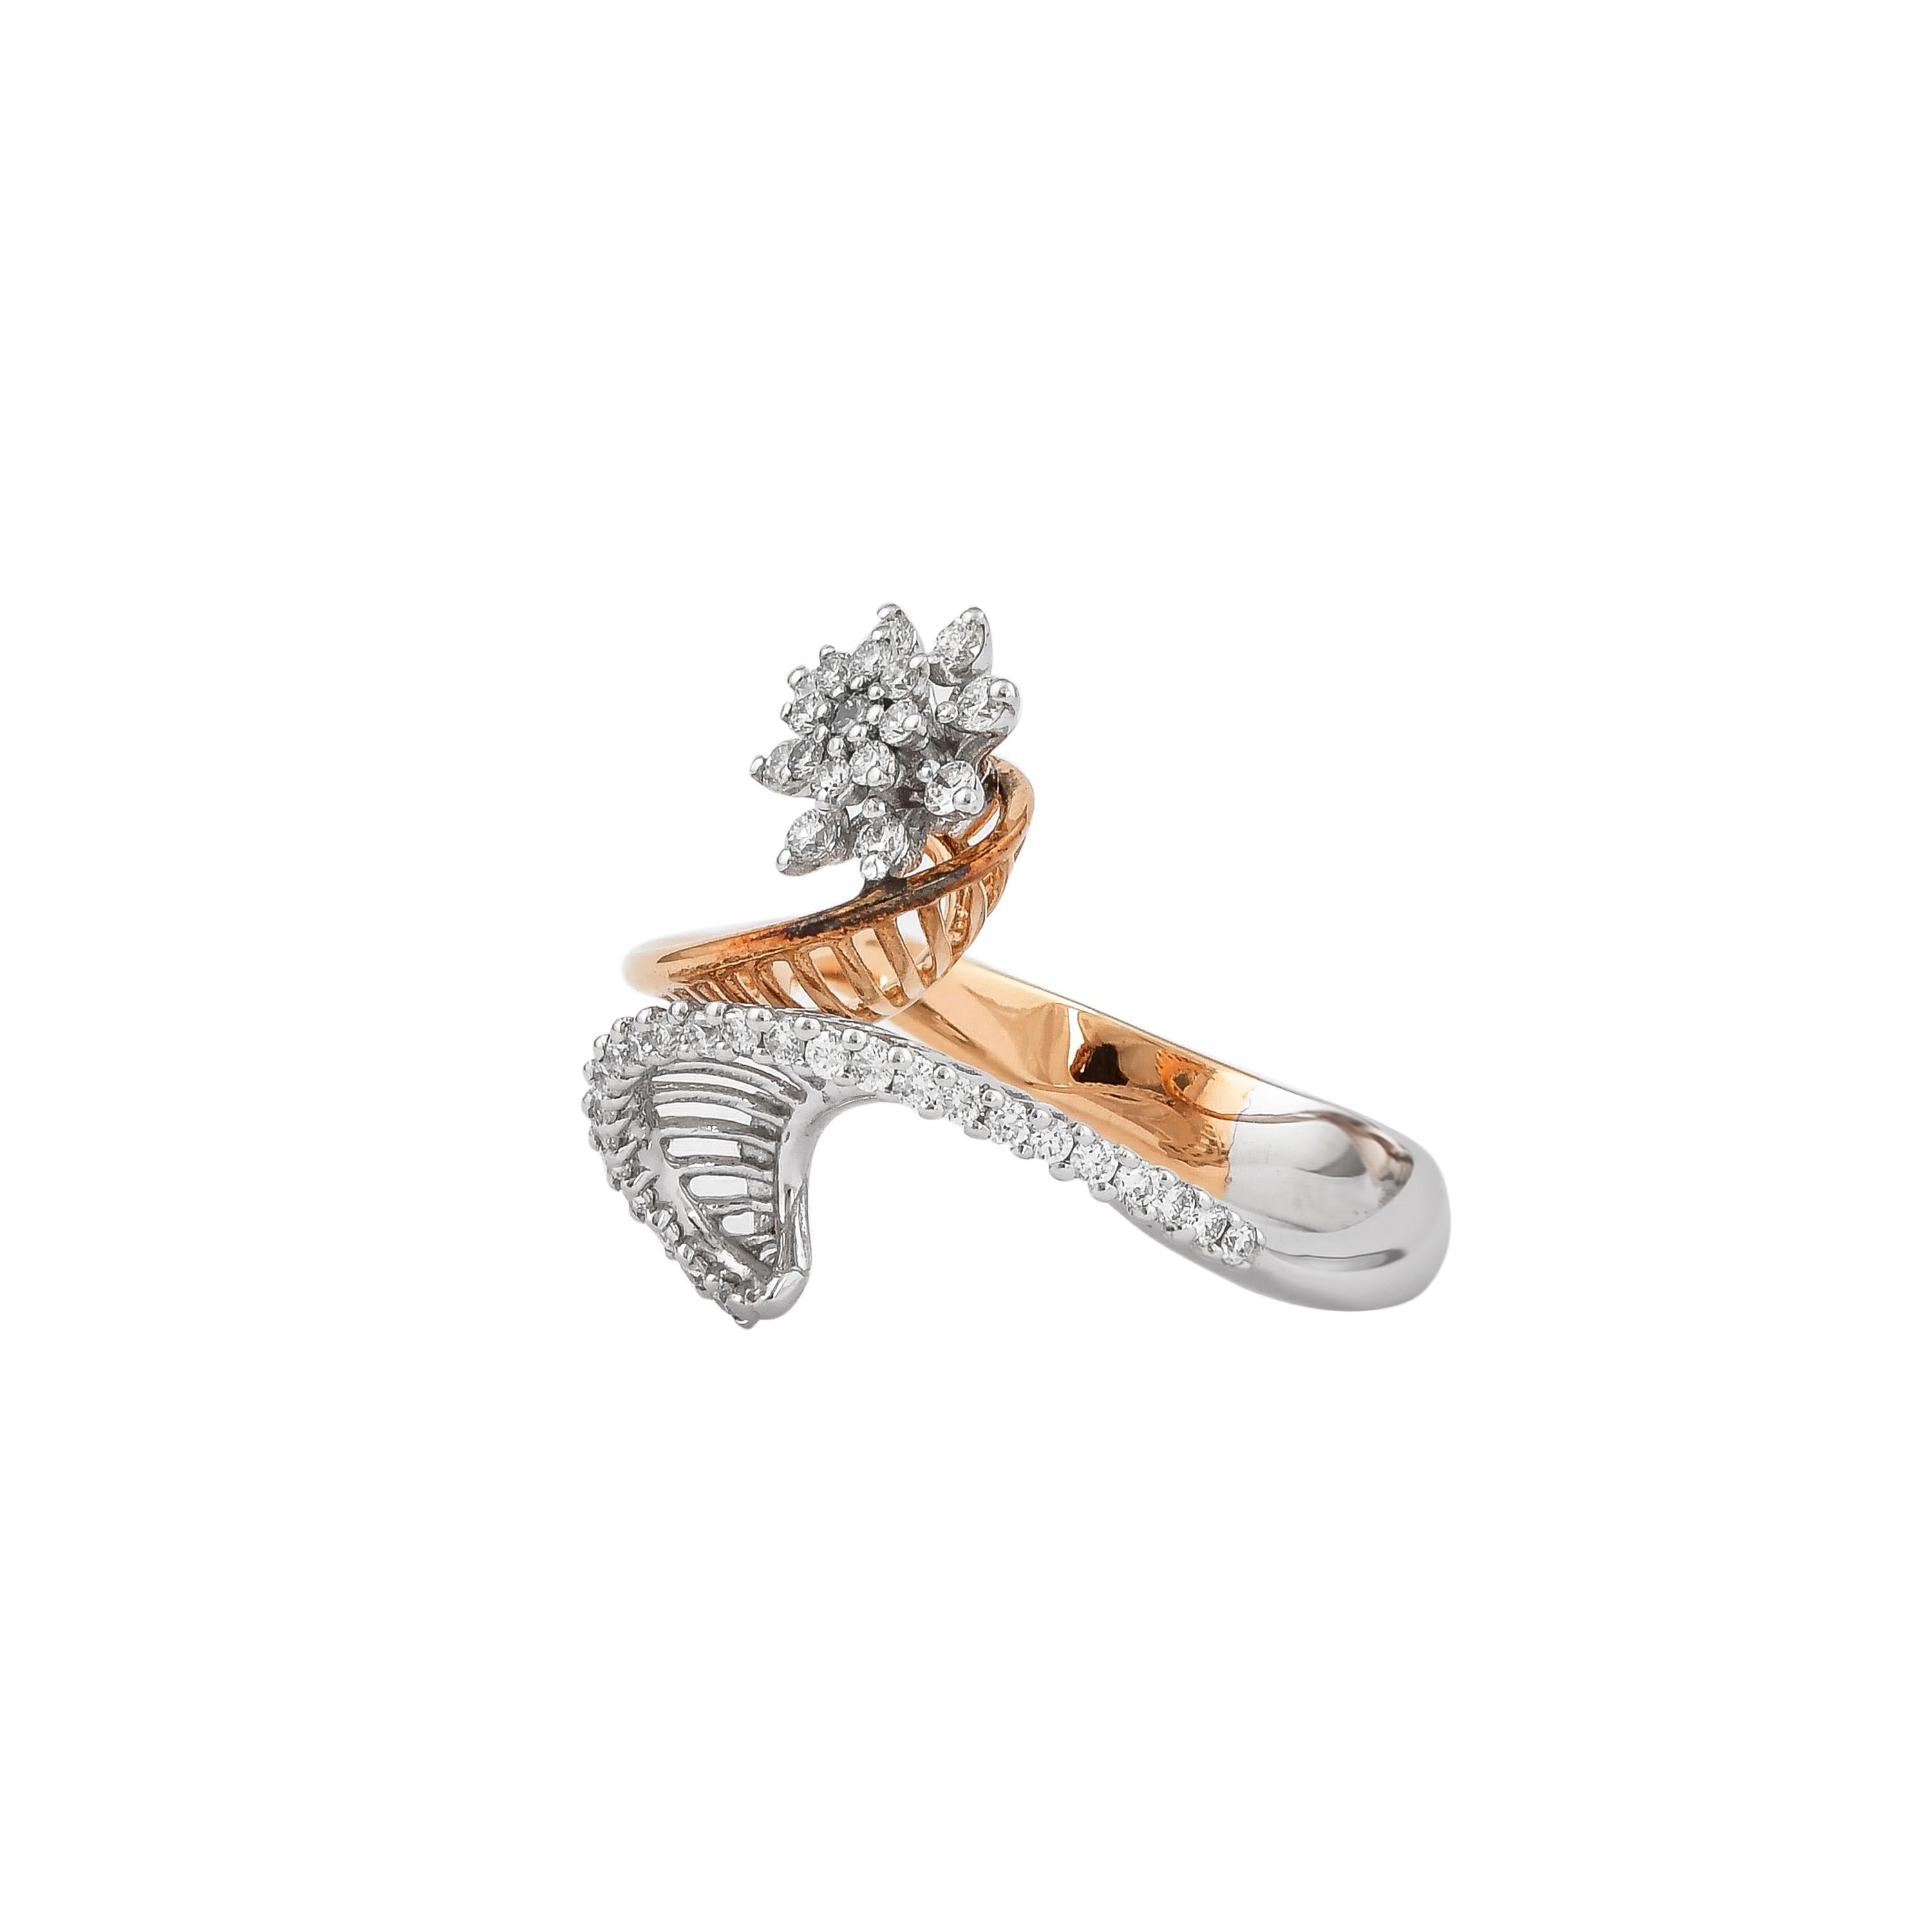 Contemporary 0.413 Carat Diamond Ring in 18 Karat White & Rose Gold. For Sale